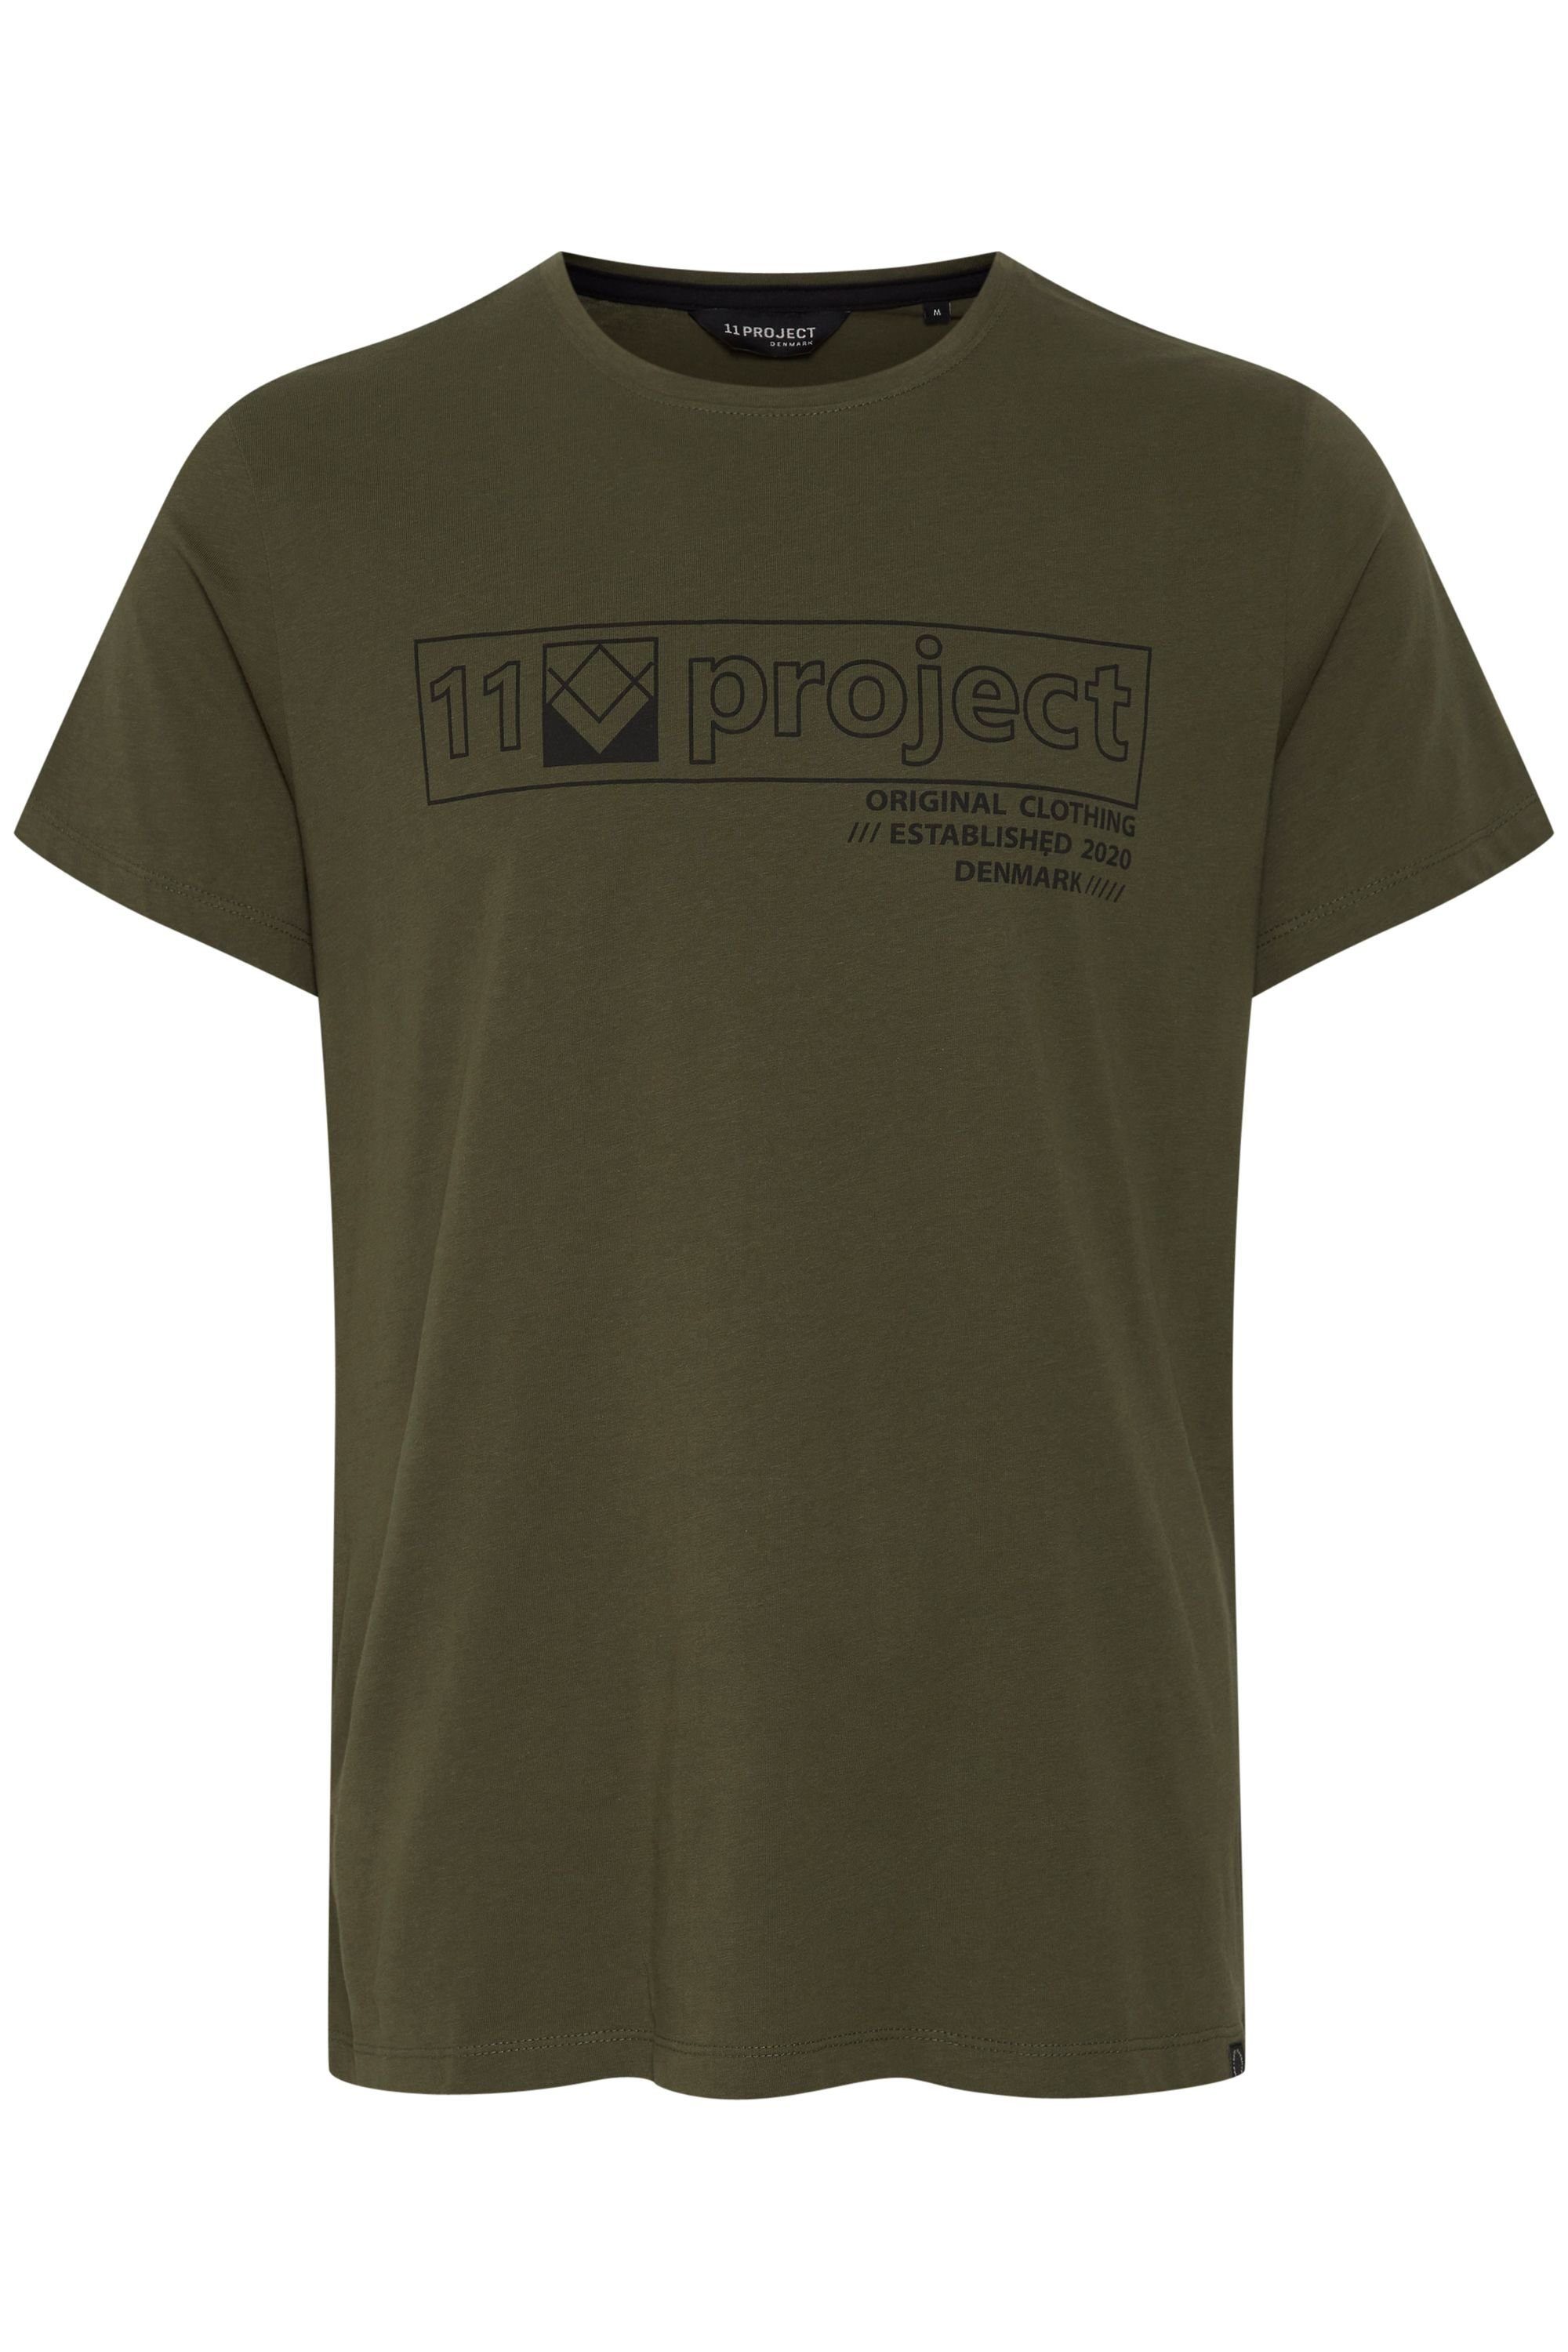 11 Project Night PRMattis 11 T-Shirt Project Olive